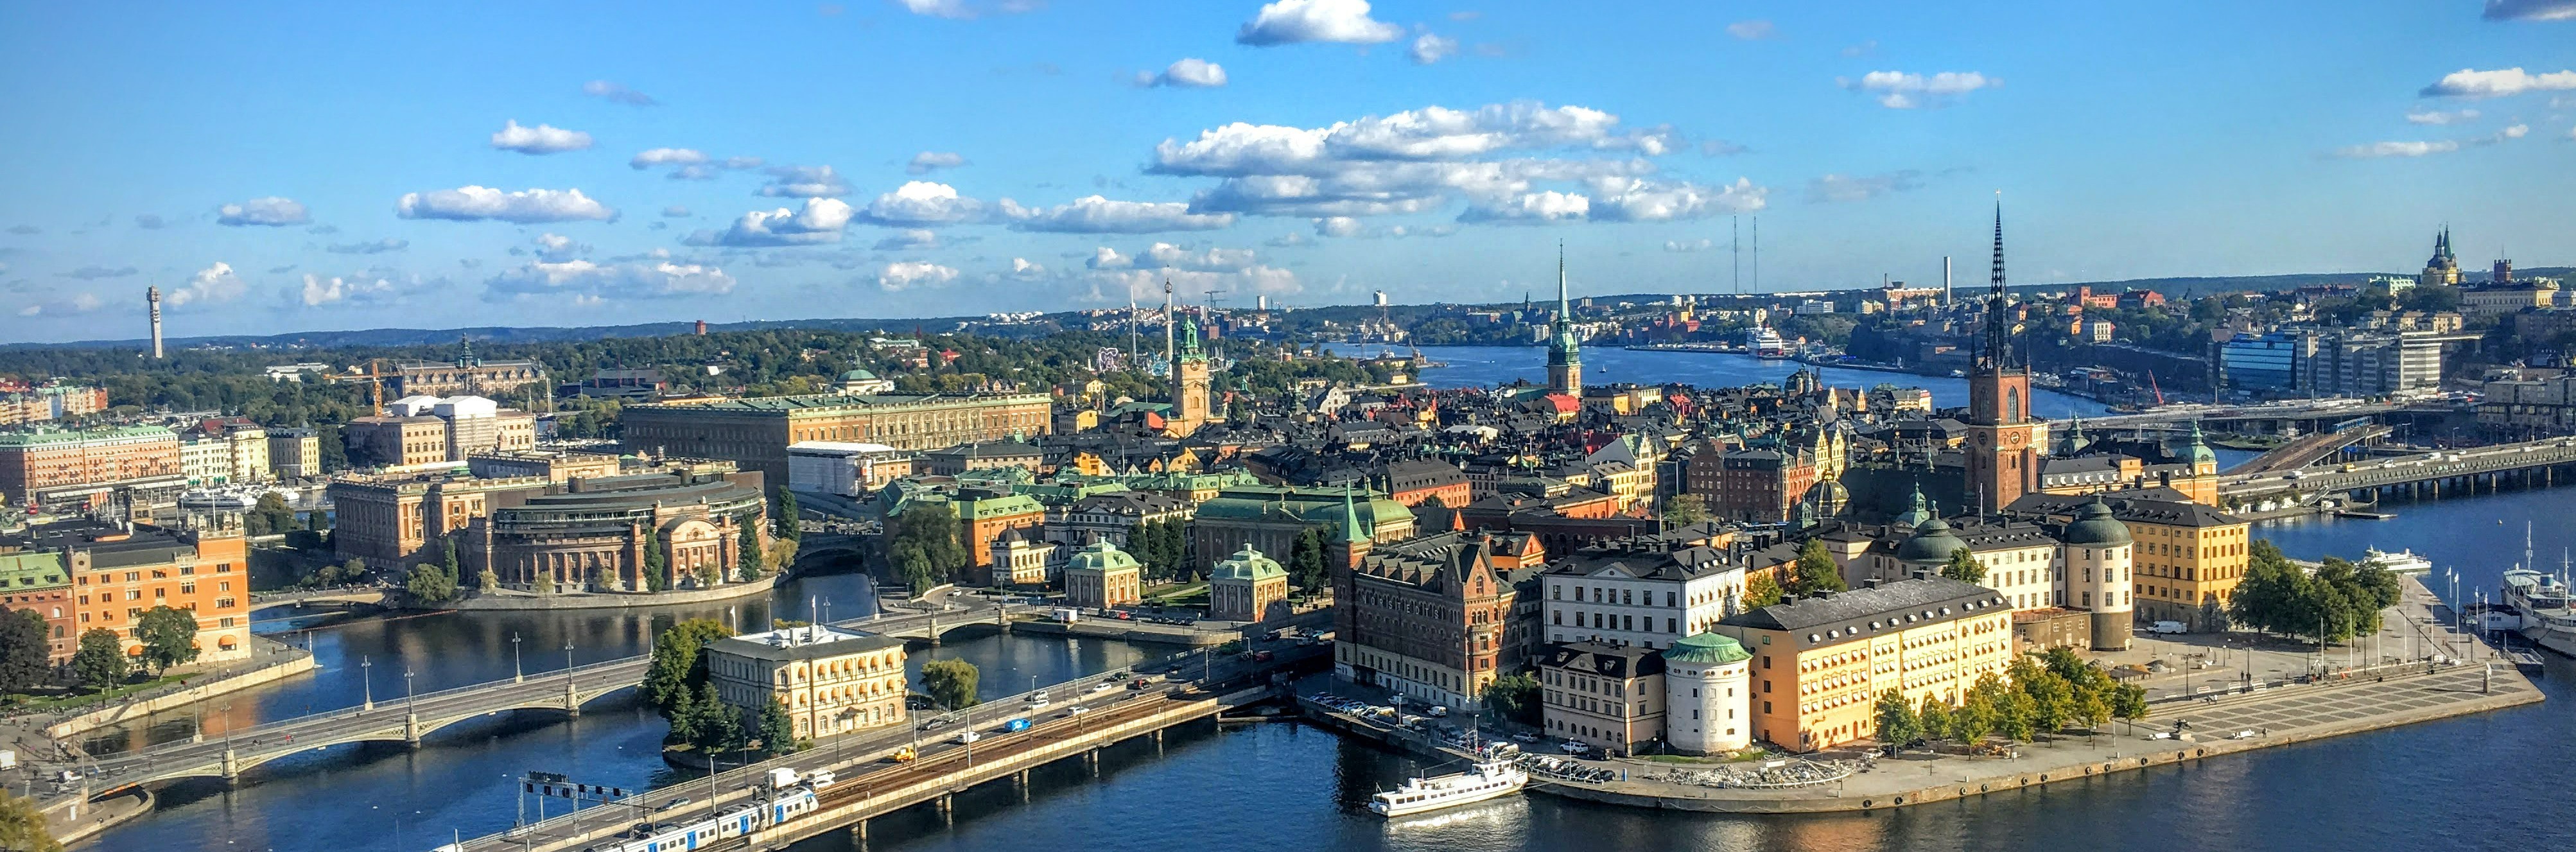 Management Training Courses in Stockholm, Sweden, Europe